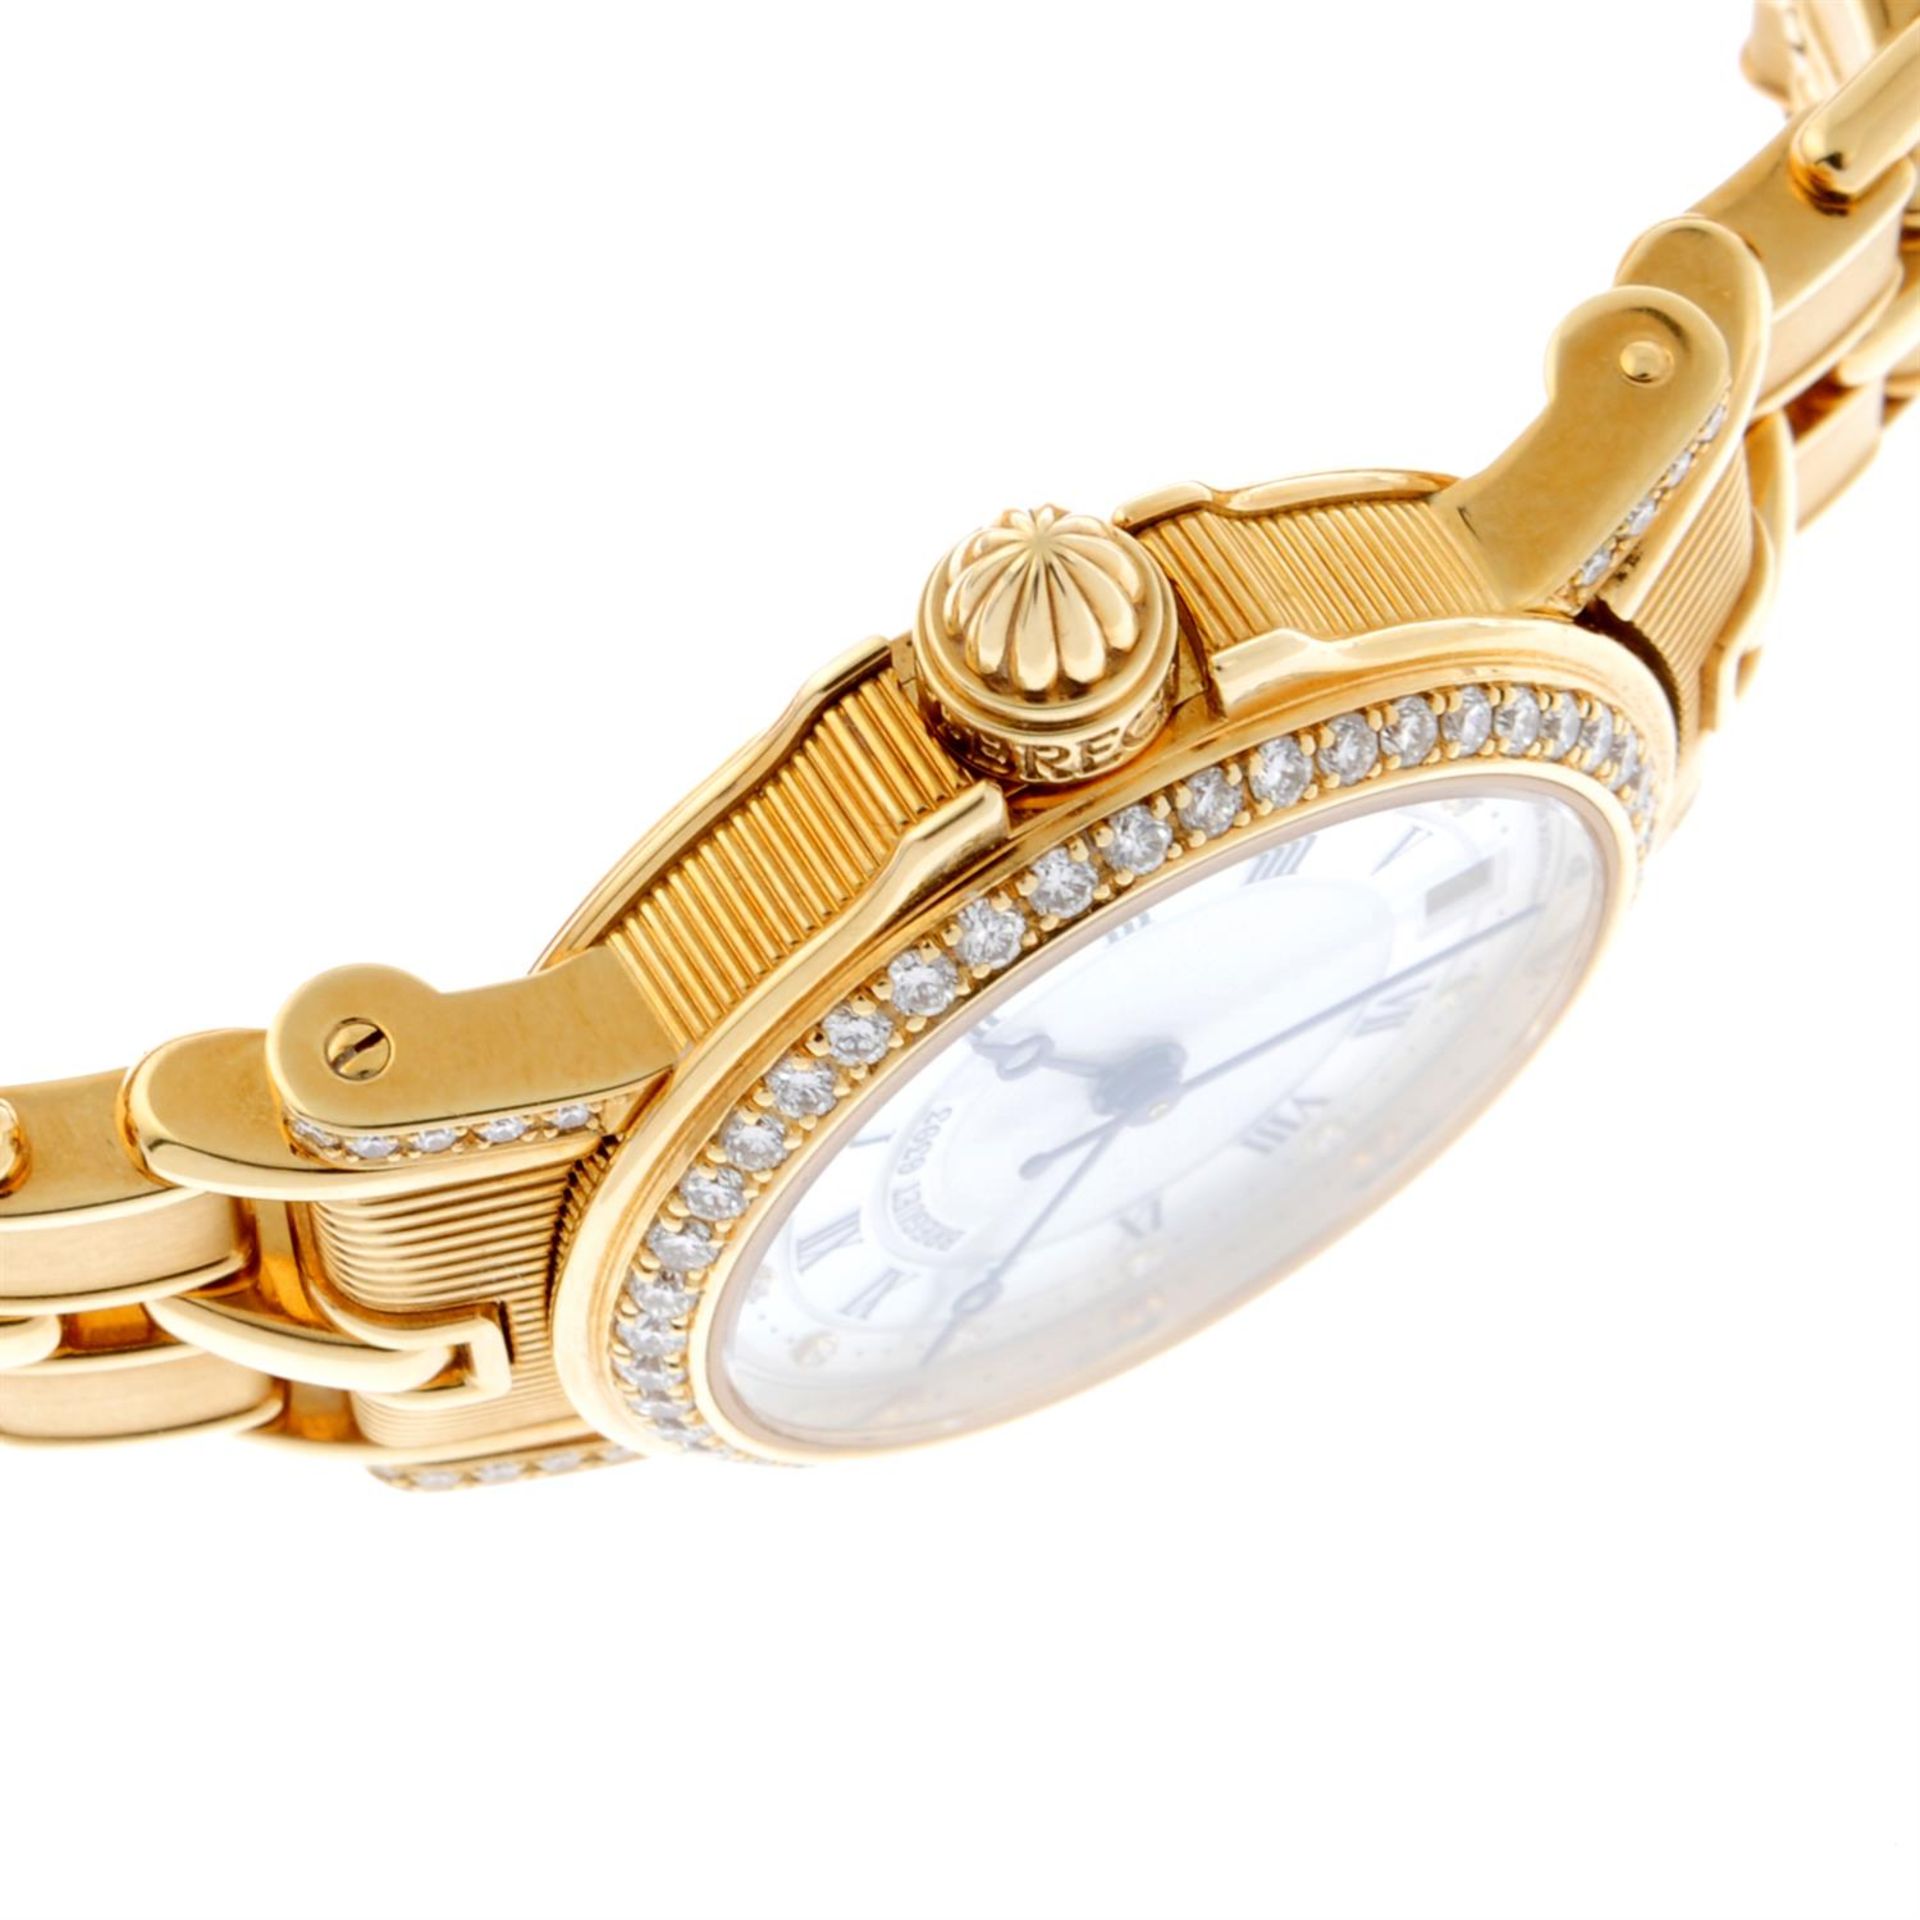 BREGUET - a diamond set 18ct yellow gold Horloger De La Marine bracelet watch, 26mm. - Image 3 of 7